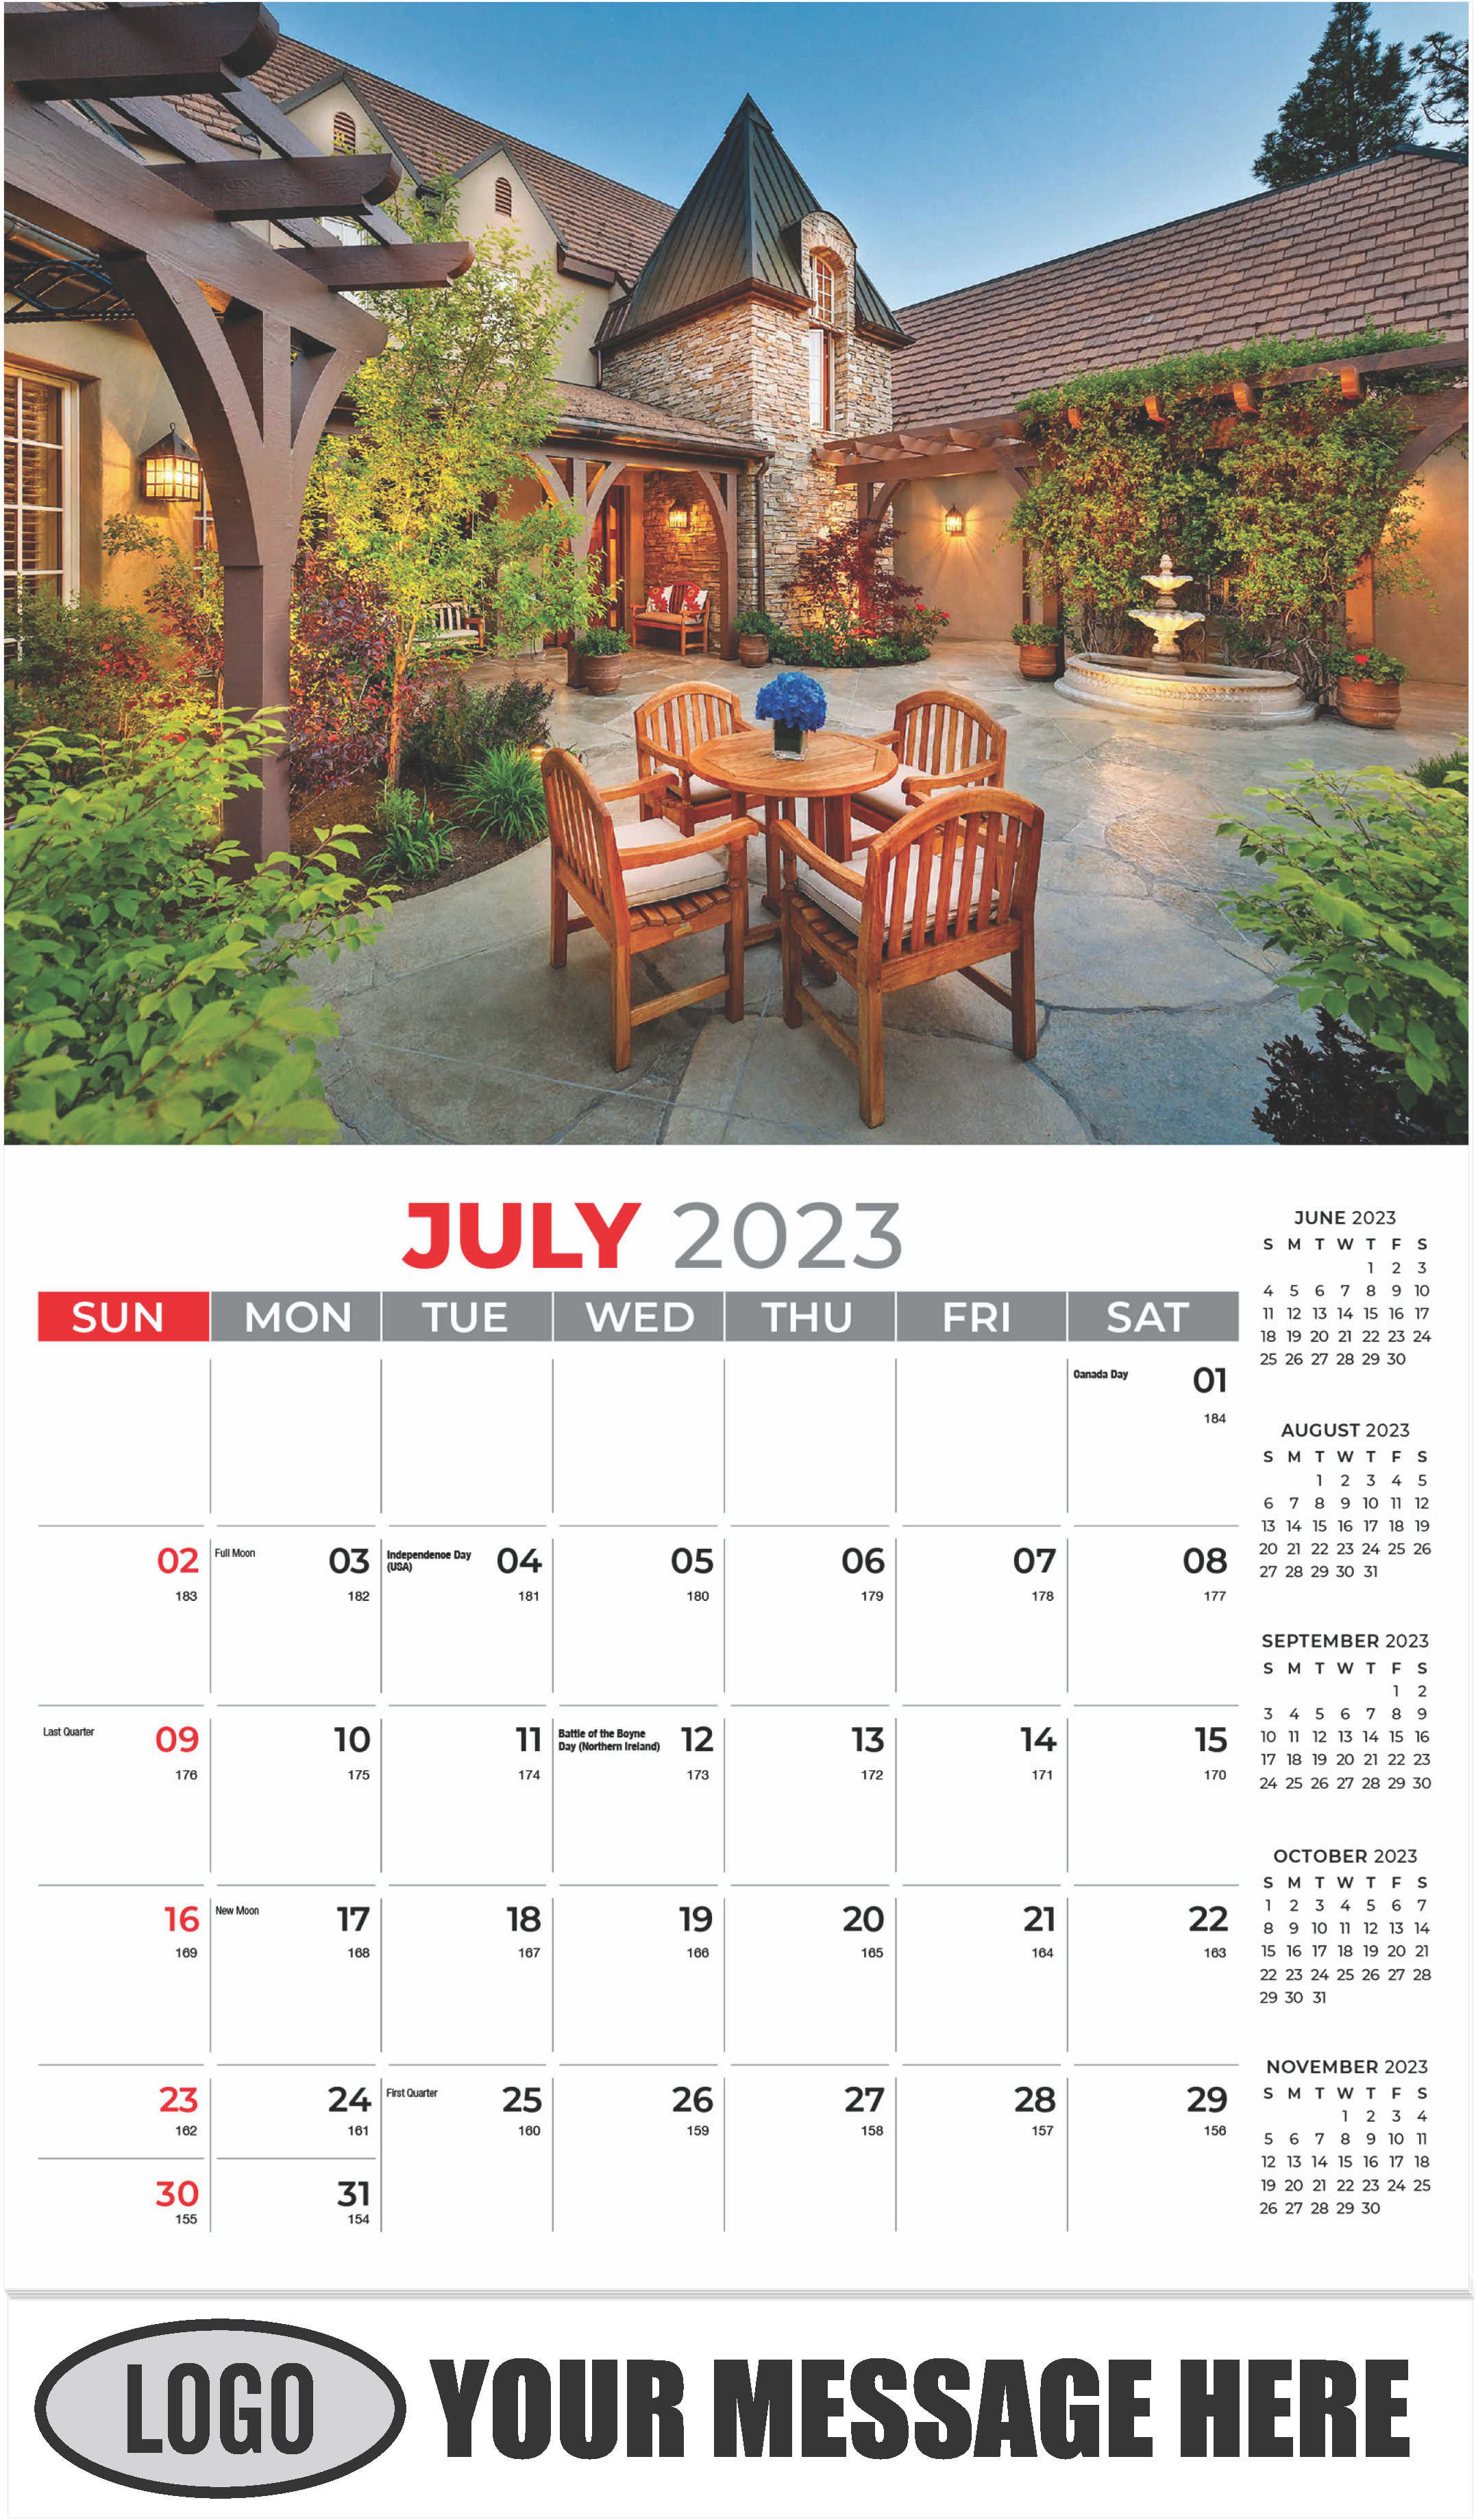 Luxury Homes Calendar - July - Homes 2023 Promotional Calendar